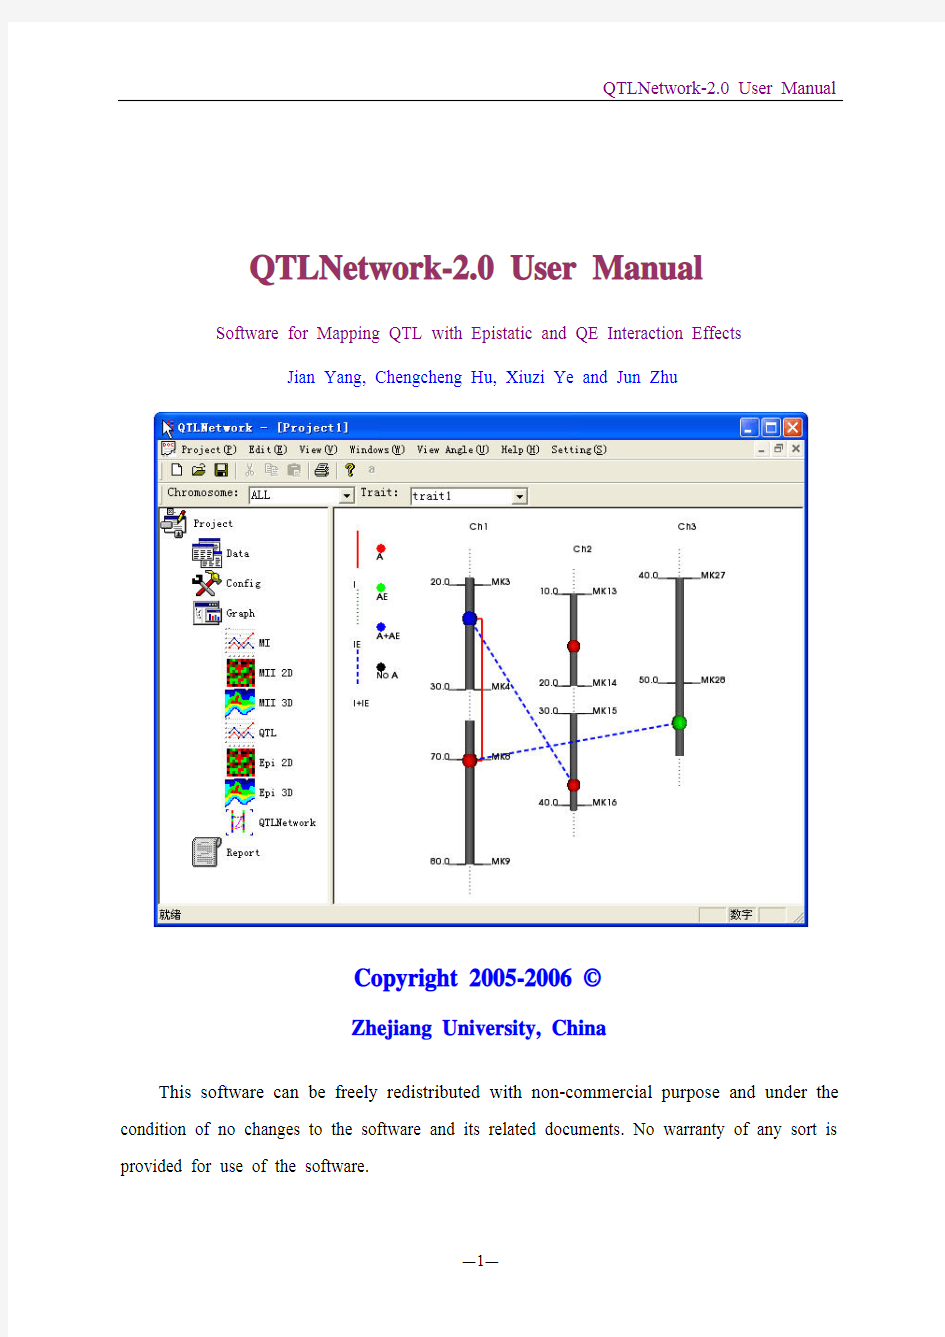 QTLNetworkUserManual